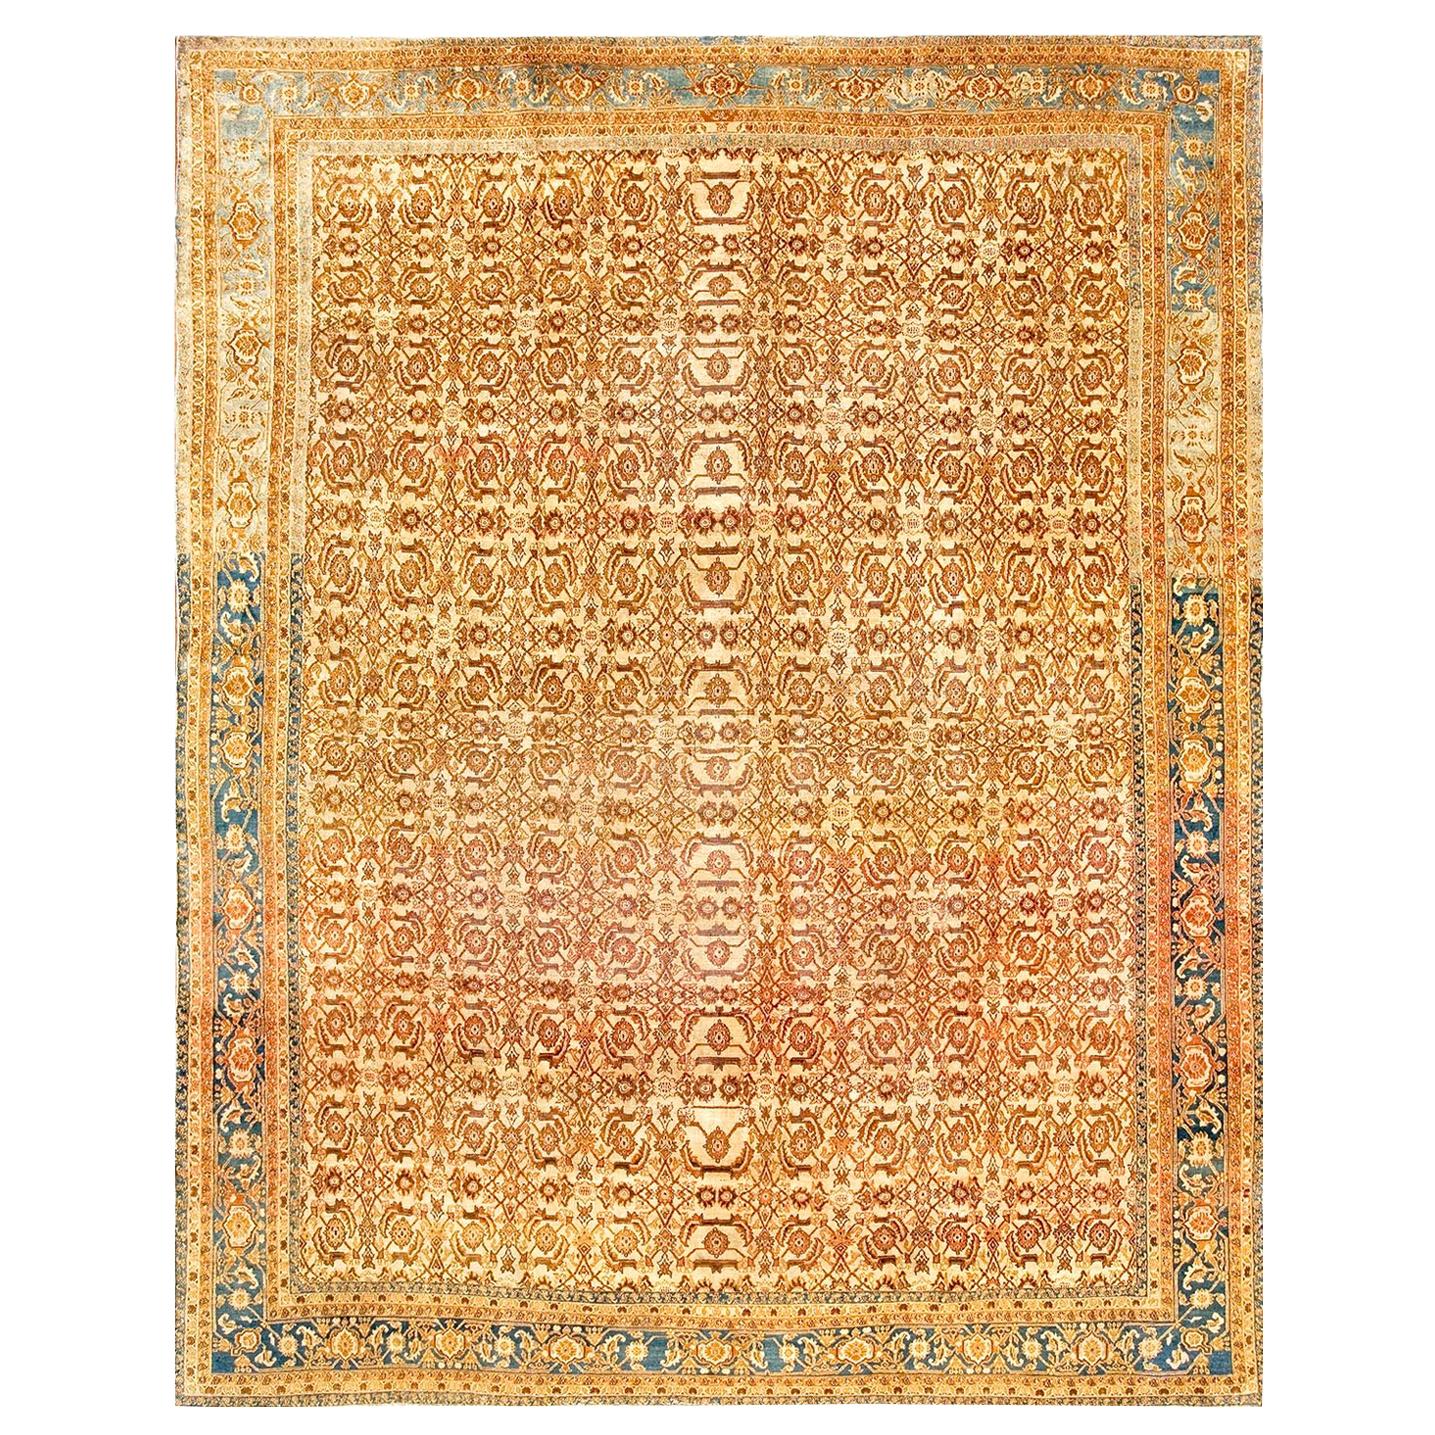 Tapis Agra du début du 20e siècle ( 9' x 11'4" - 275 x 345 )